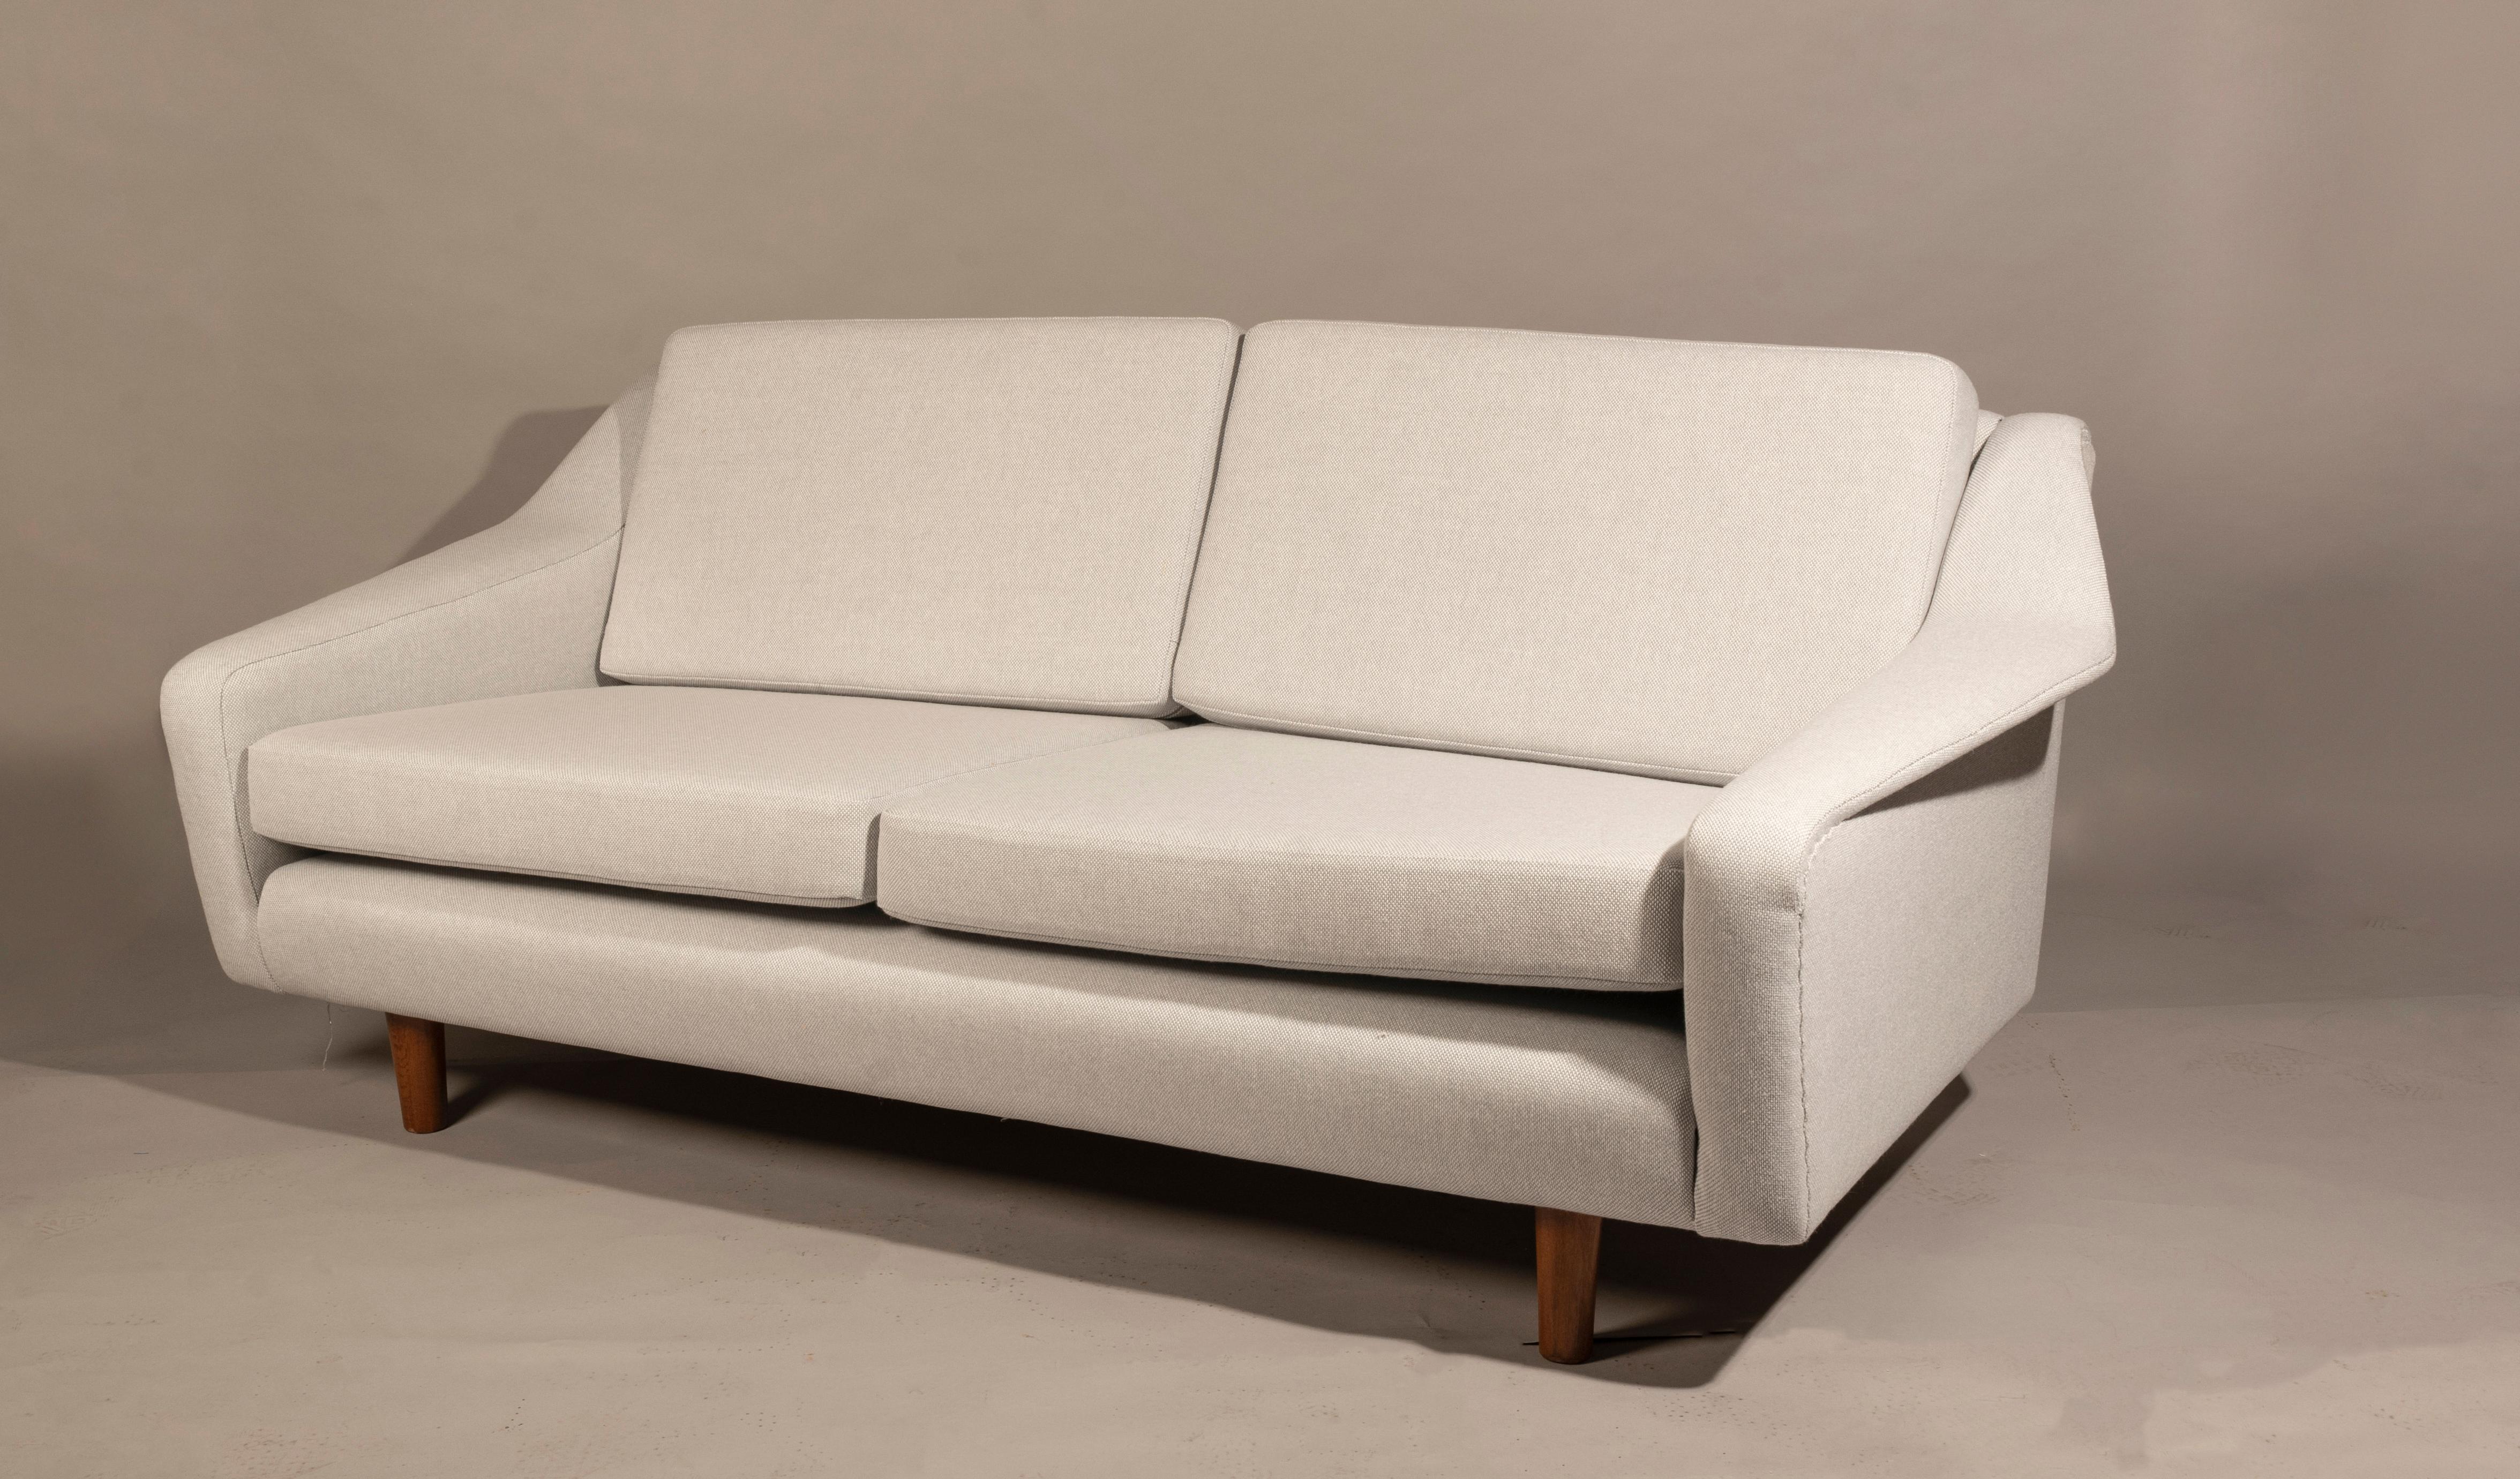 Two-seat sofa, Denmark 1960s, oak legs, reupholstered in grey/white Kvadrat fabric.